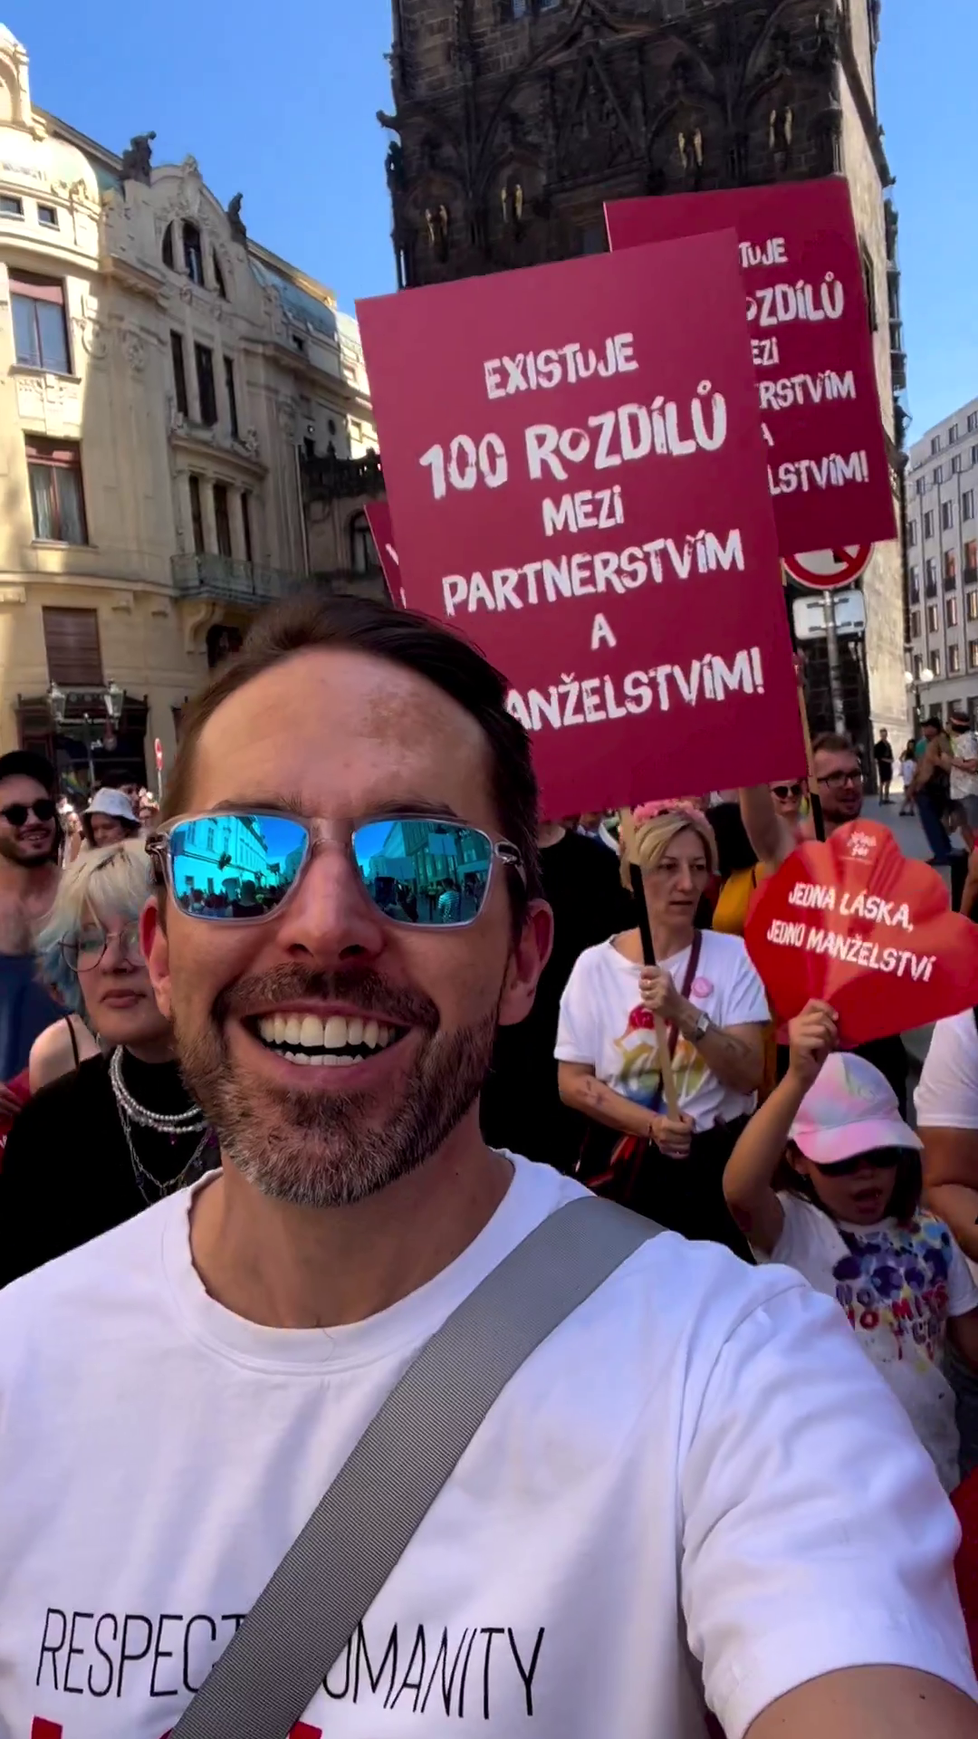 Daniel Bambas na Prague Pride